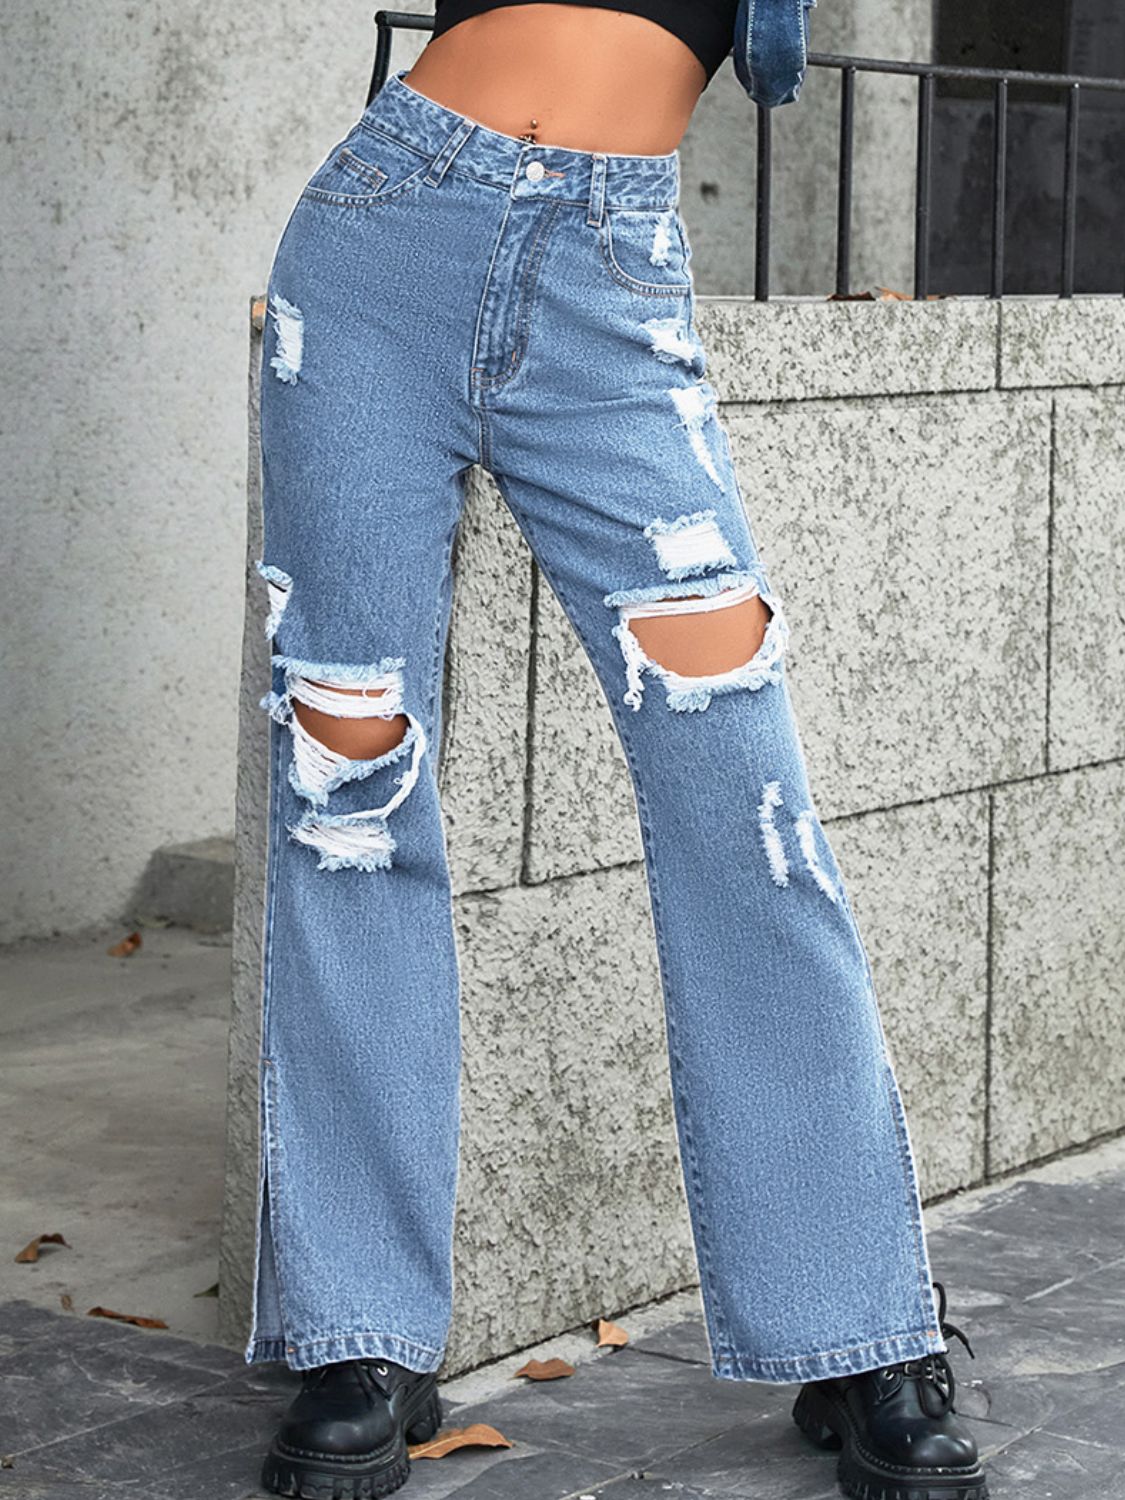 CBGELRT Vintage Jeans For Women High Waist Female, 49% OFF